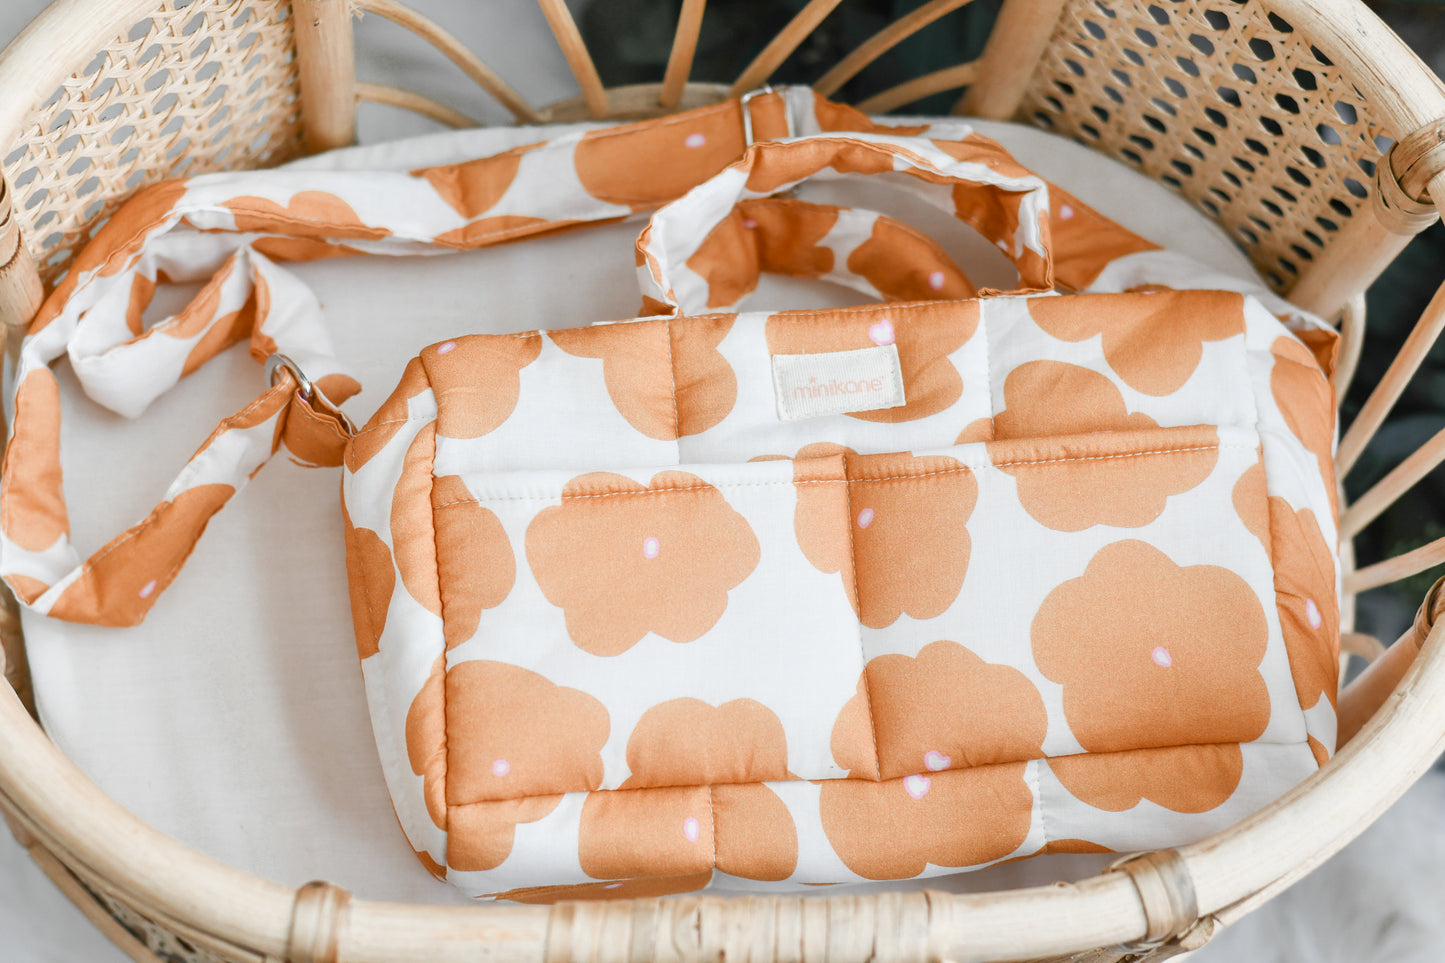 Soft Diaper Bag - Floral- DOLL